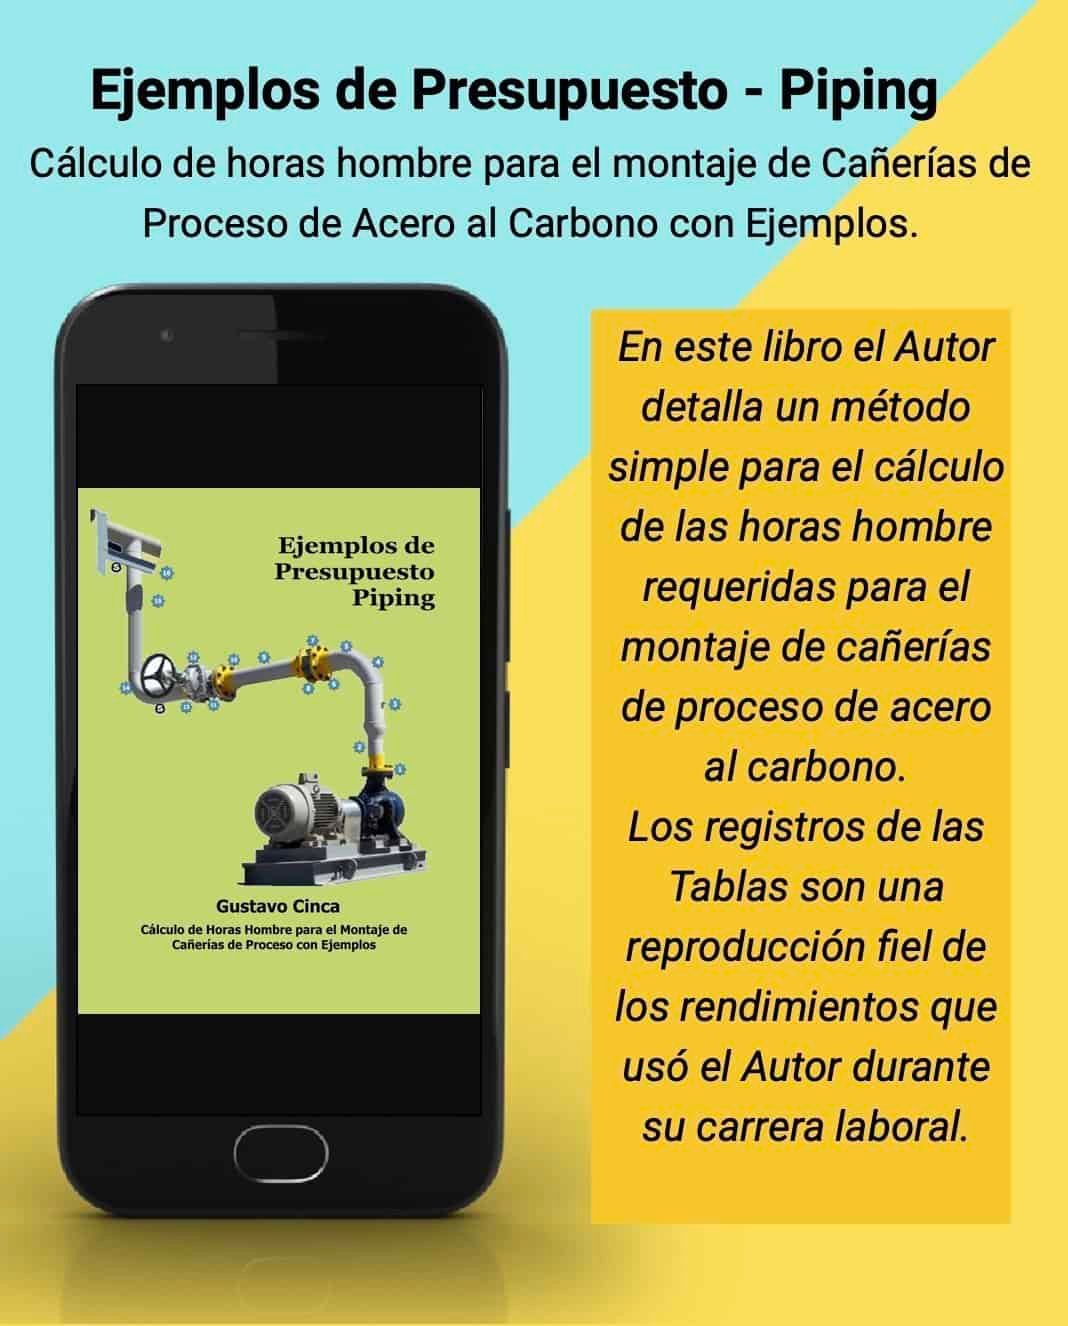 The figure displays a booklet with the cover and a brief description of the book: Ejemplos de Presupuesto - Piping. Gustavo Cinca Books.